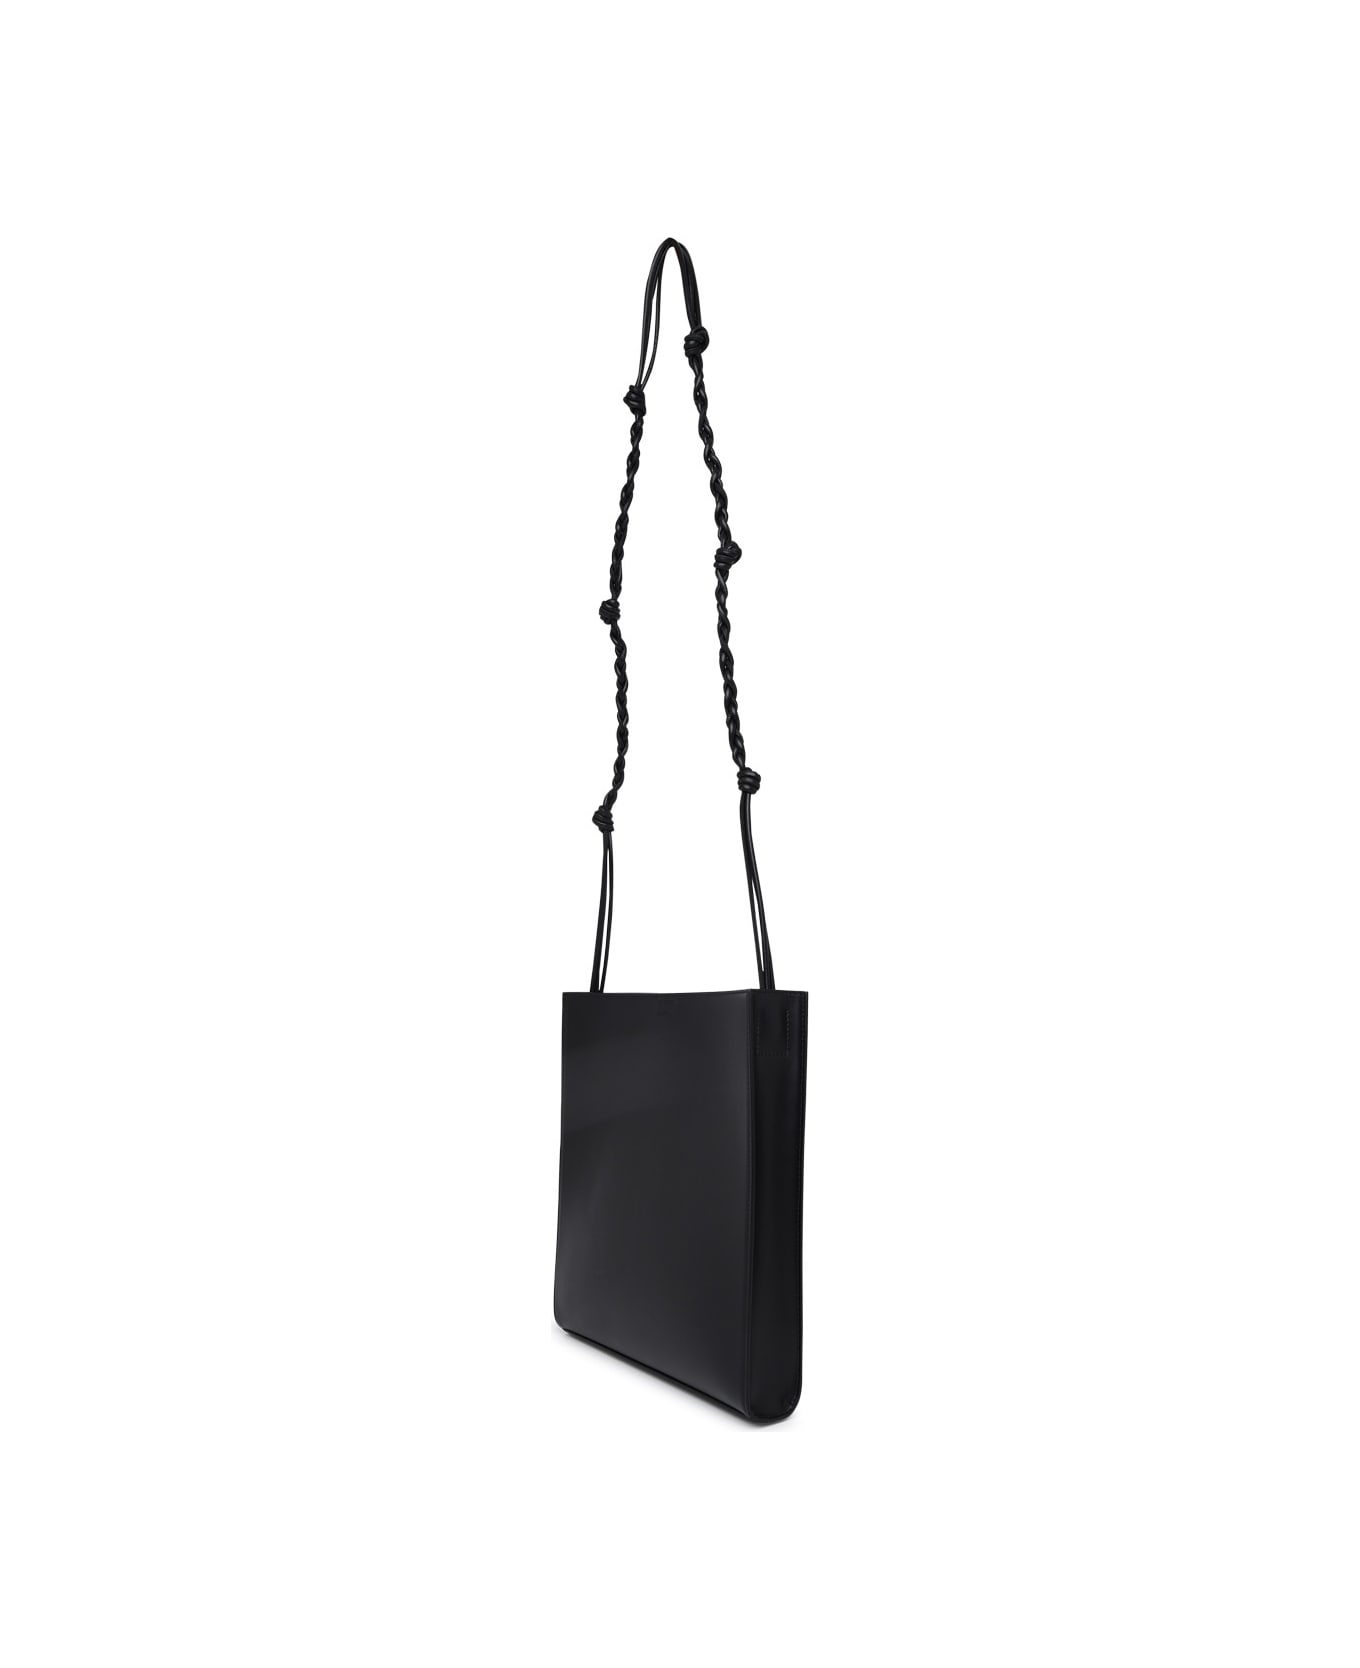 Jil Sander Medium Tangle Bag In Black Leather - Black